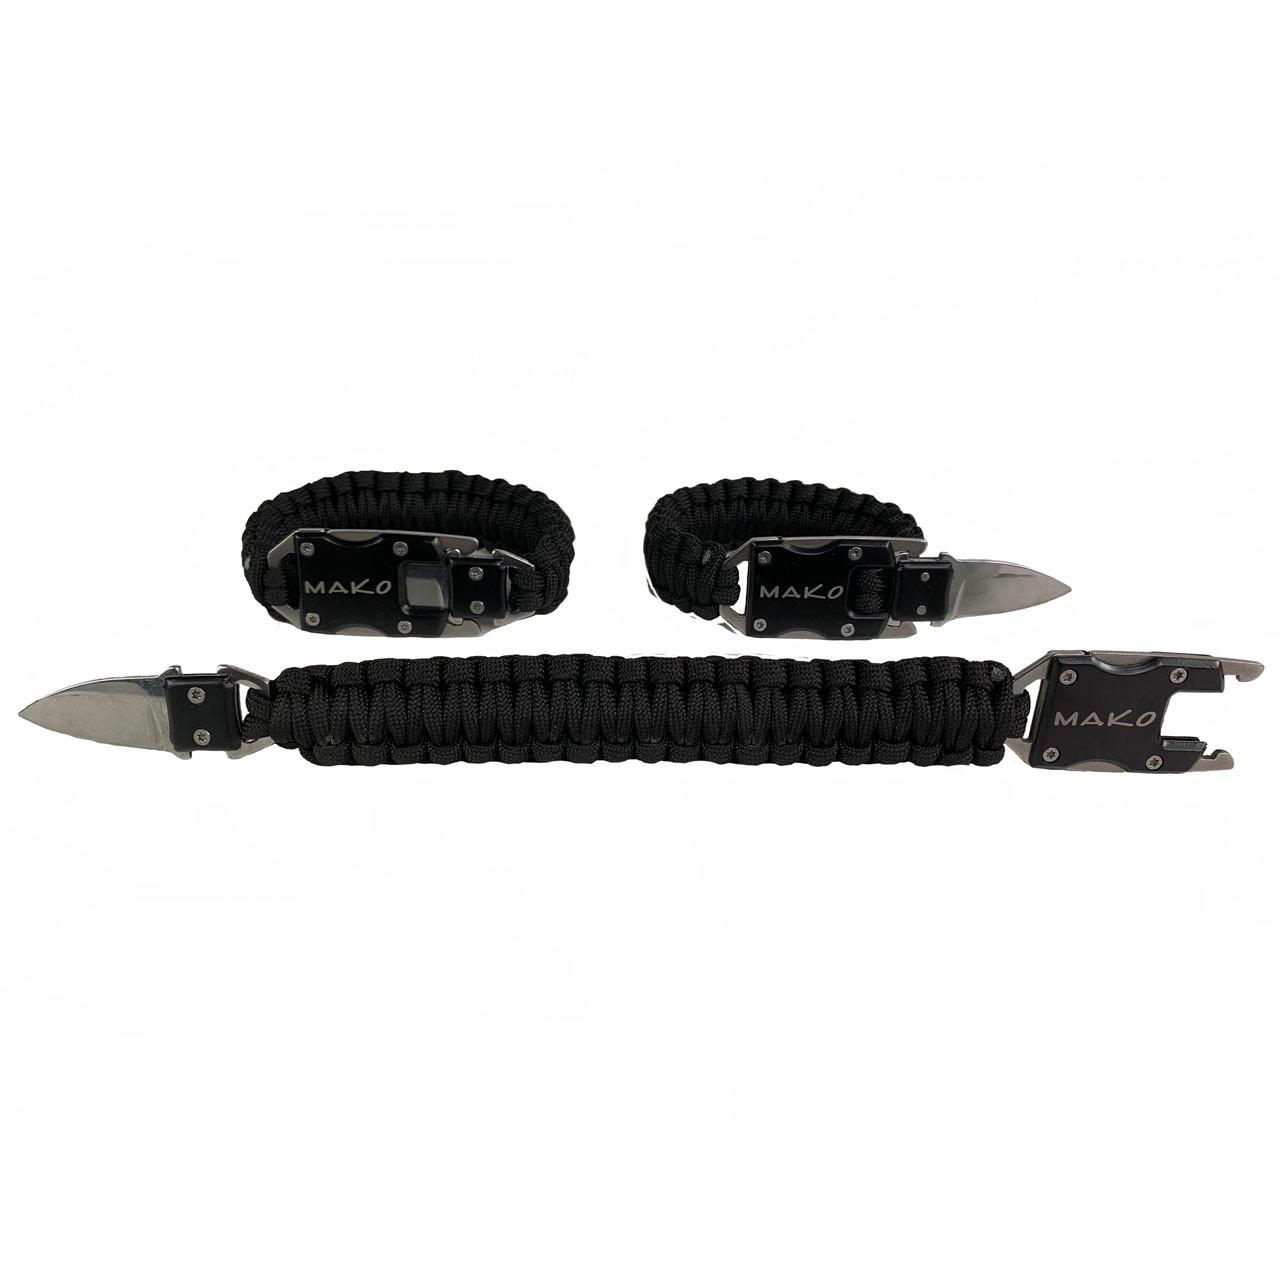 Paracord Bracelet With Hidden Knife